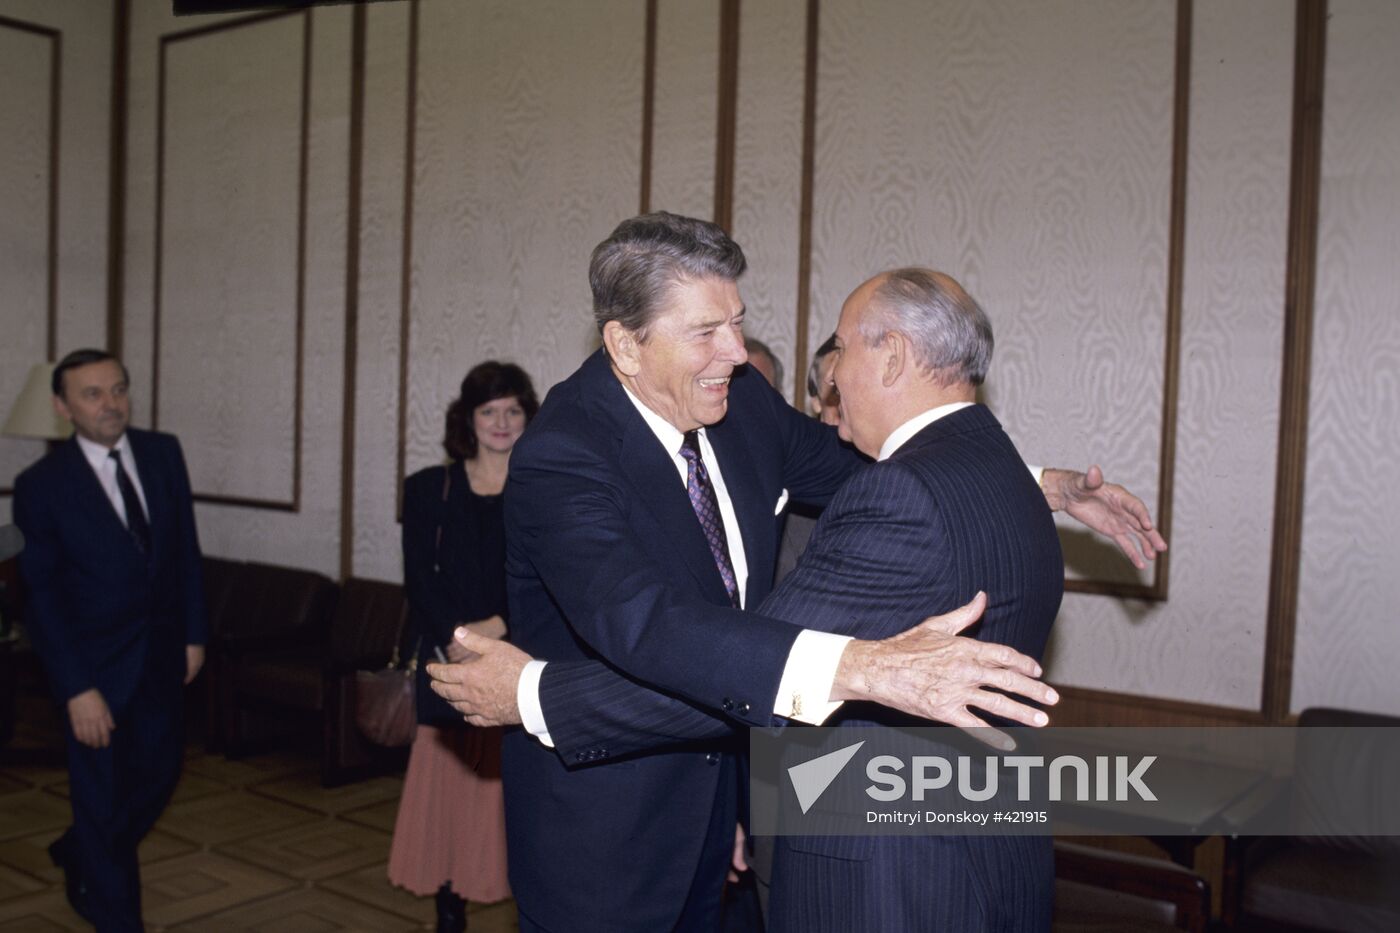 Soviet leader Mikhail Gorbachev meeting with Ronald Reagan